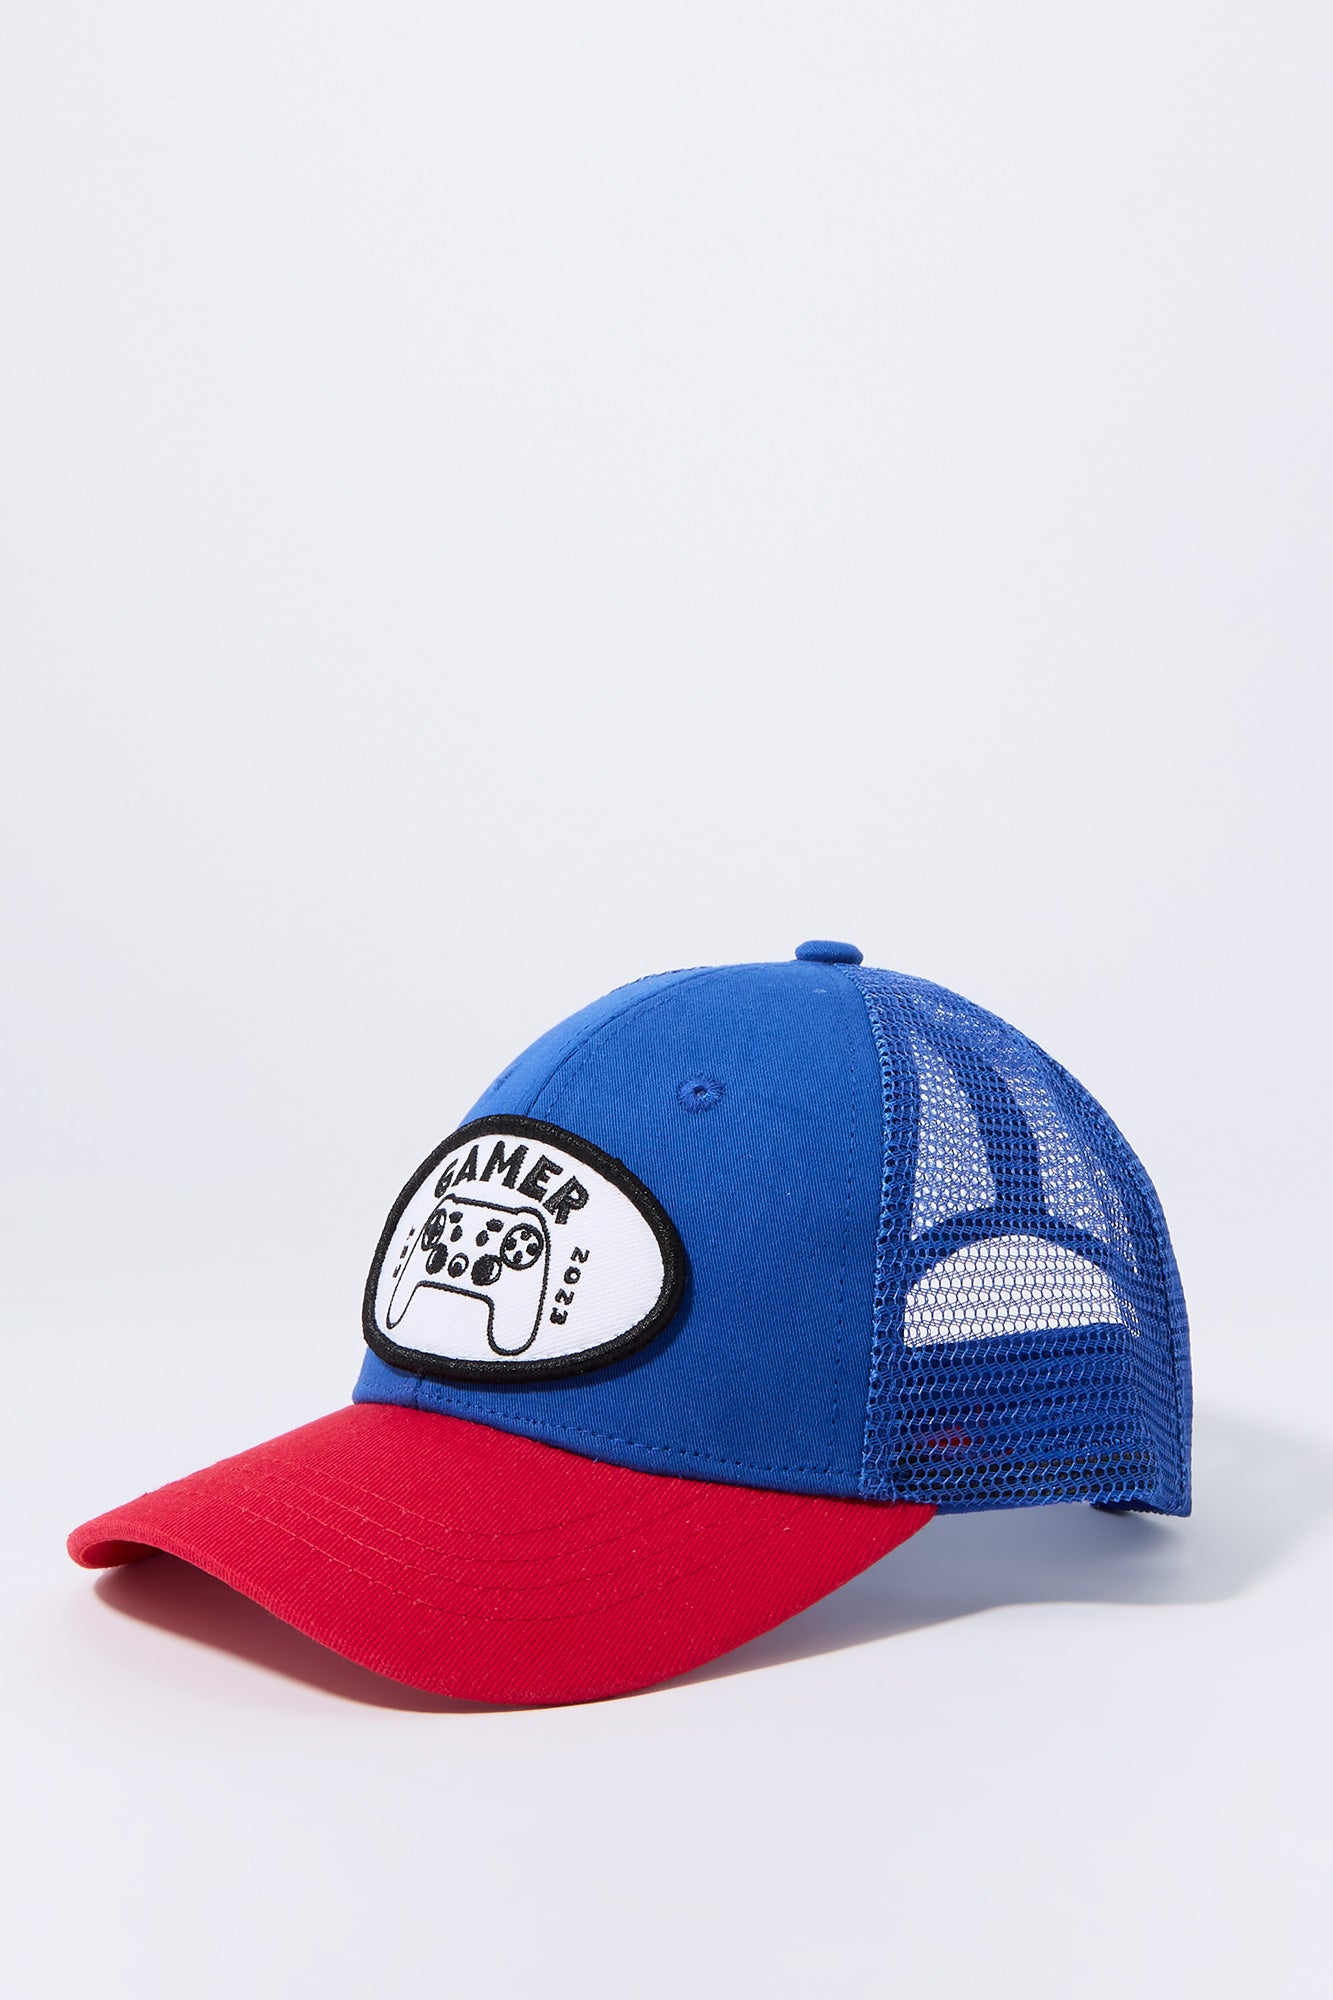 Gamer Embroidered Baseball Hat